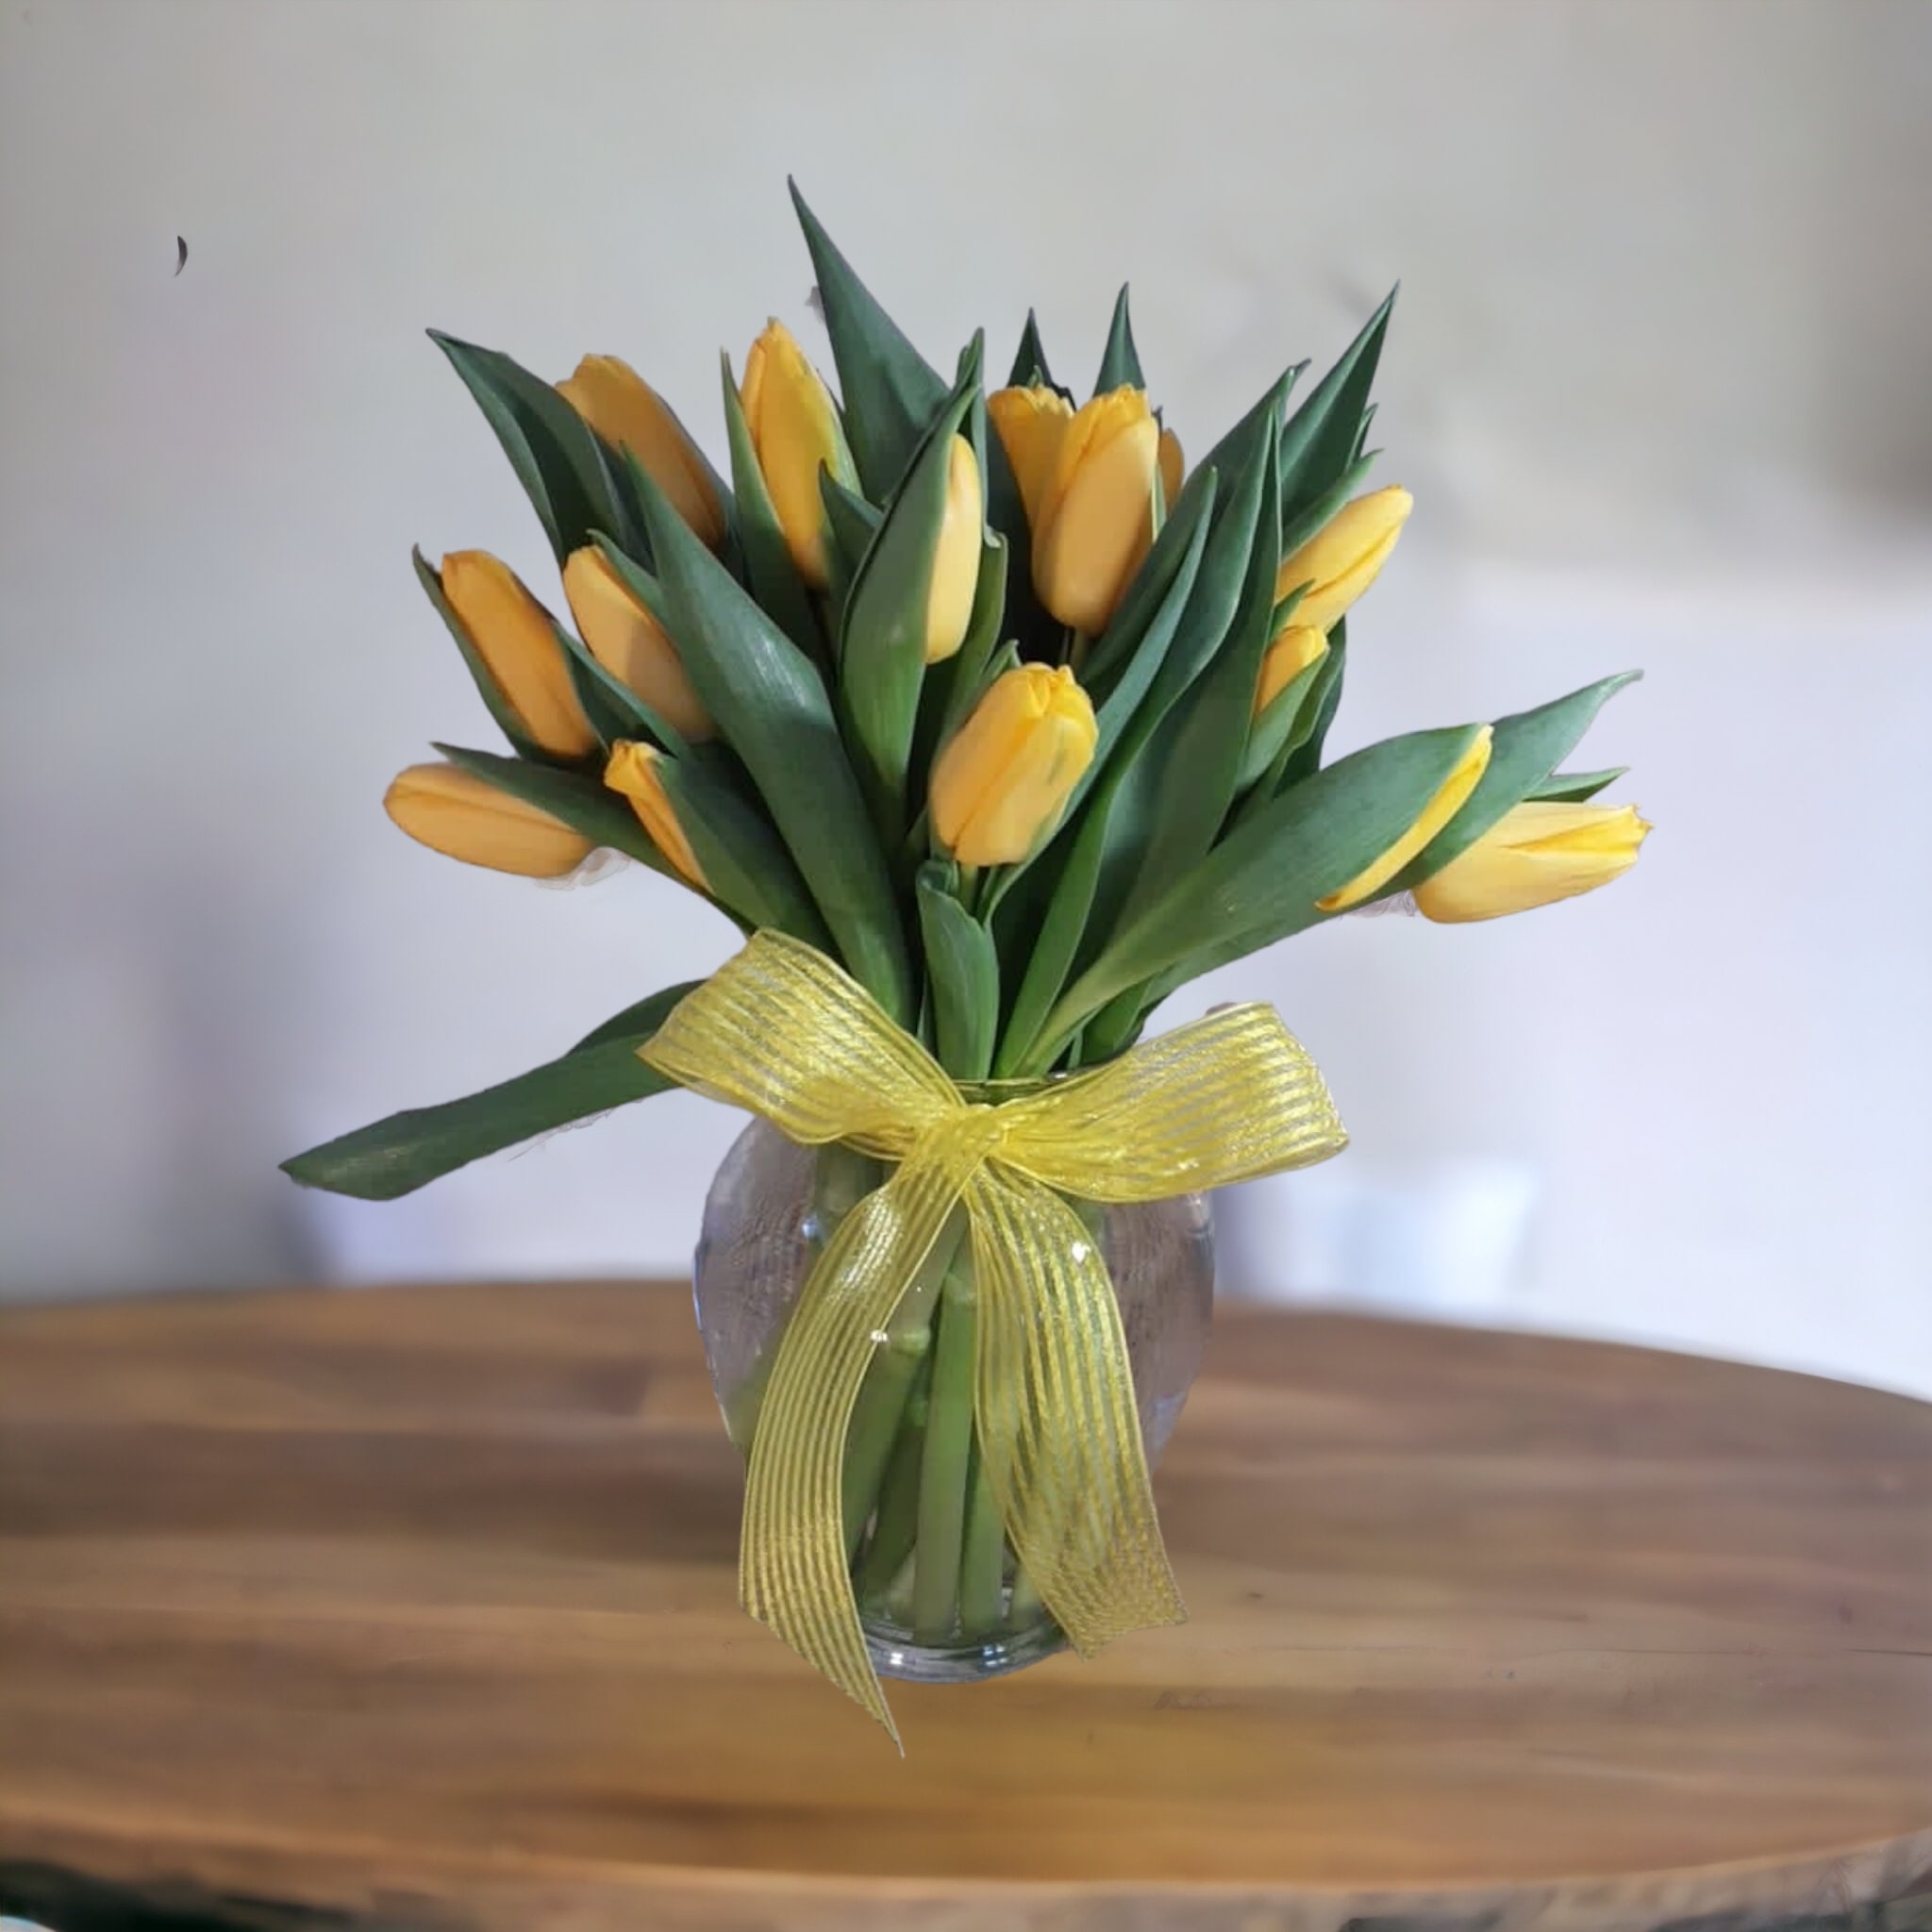 Lovely Lemon Tulips - Bright lemon yellow tulips bring the sunshine on the dreariest day.  